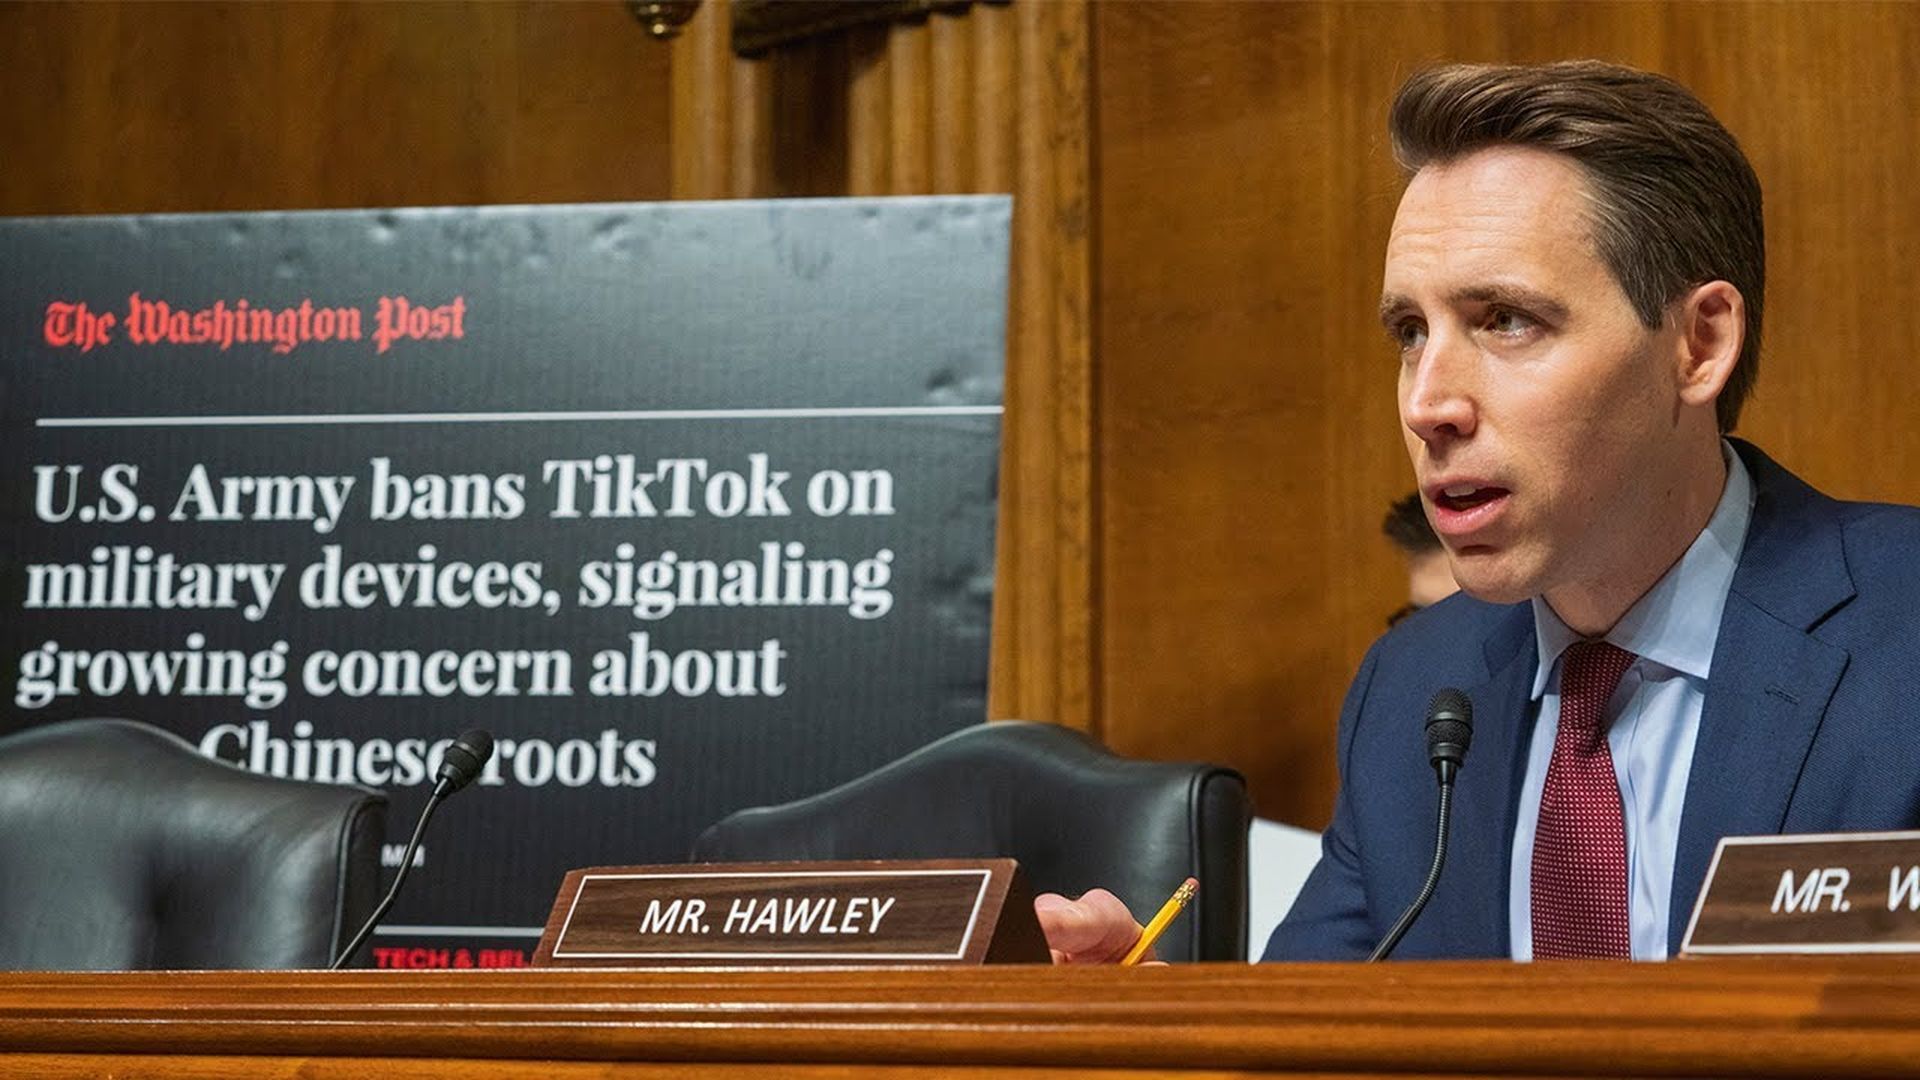 Senator Mr. Hawley on the U.S. Army TikTok ban